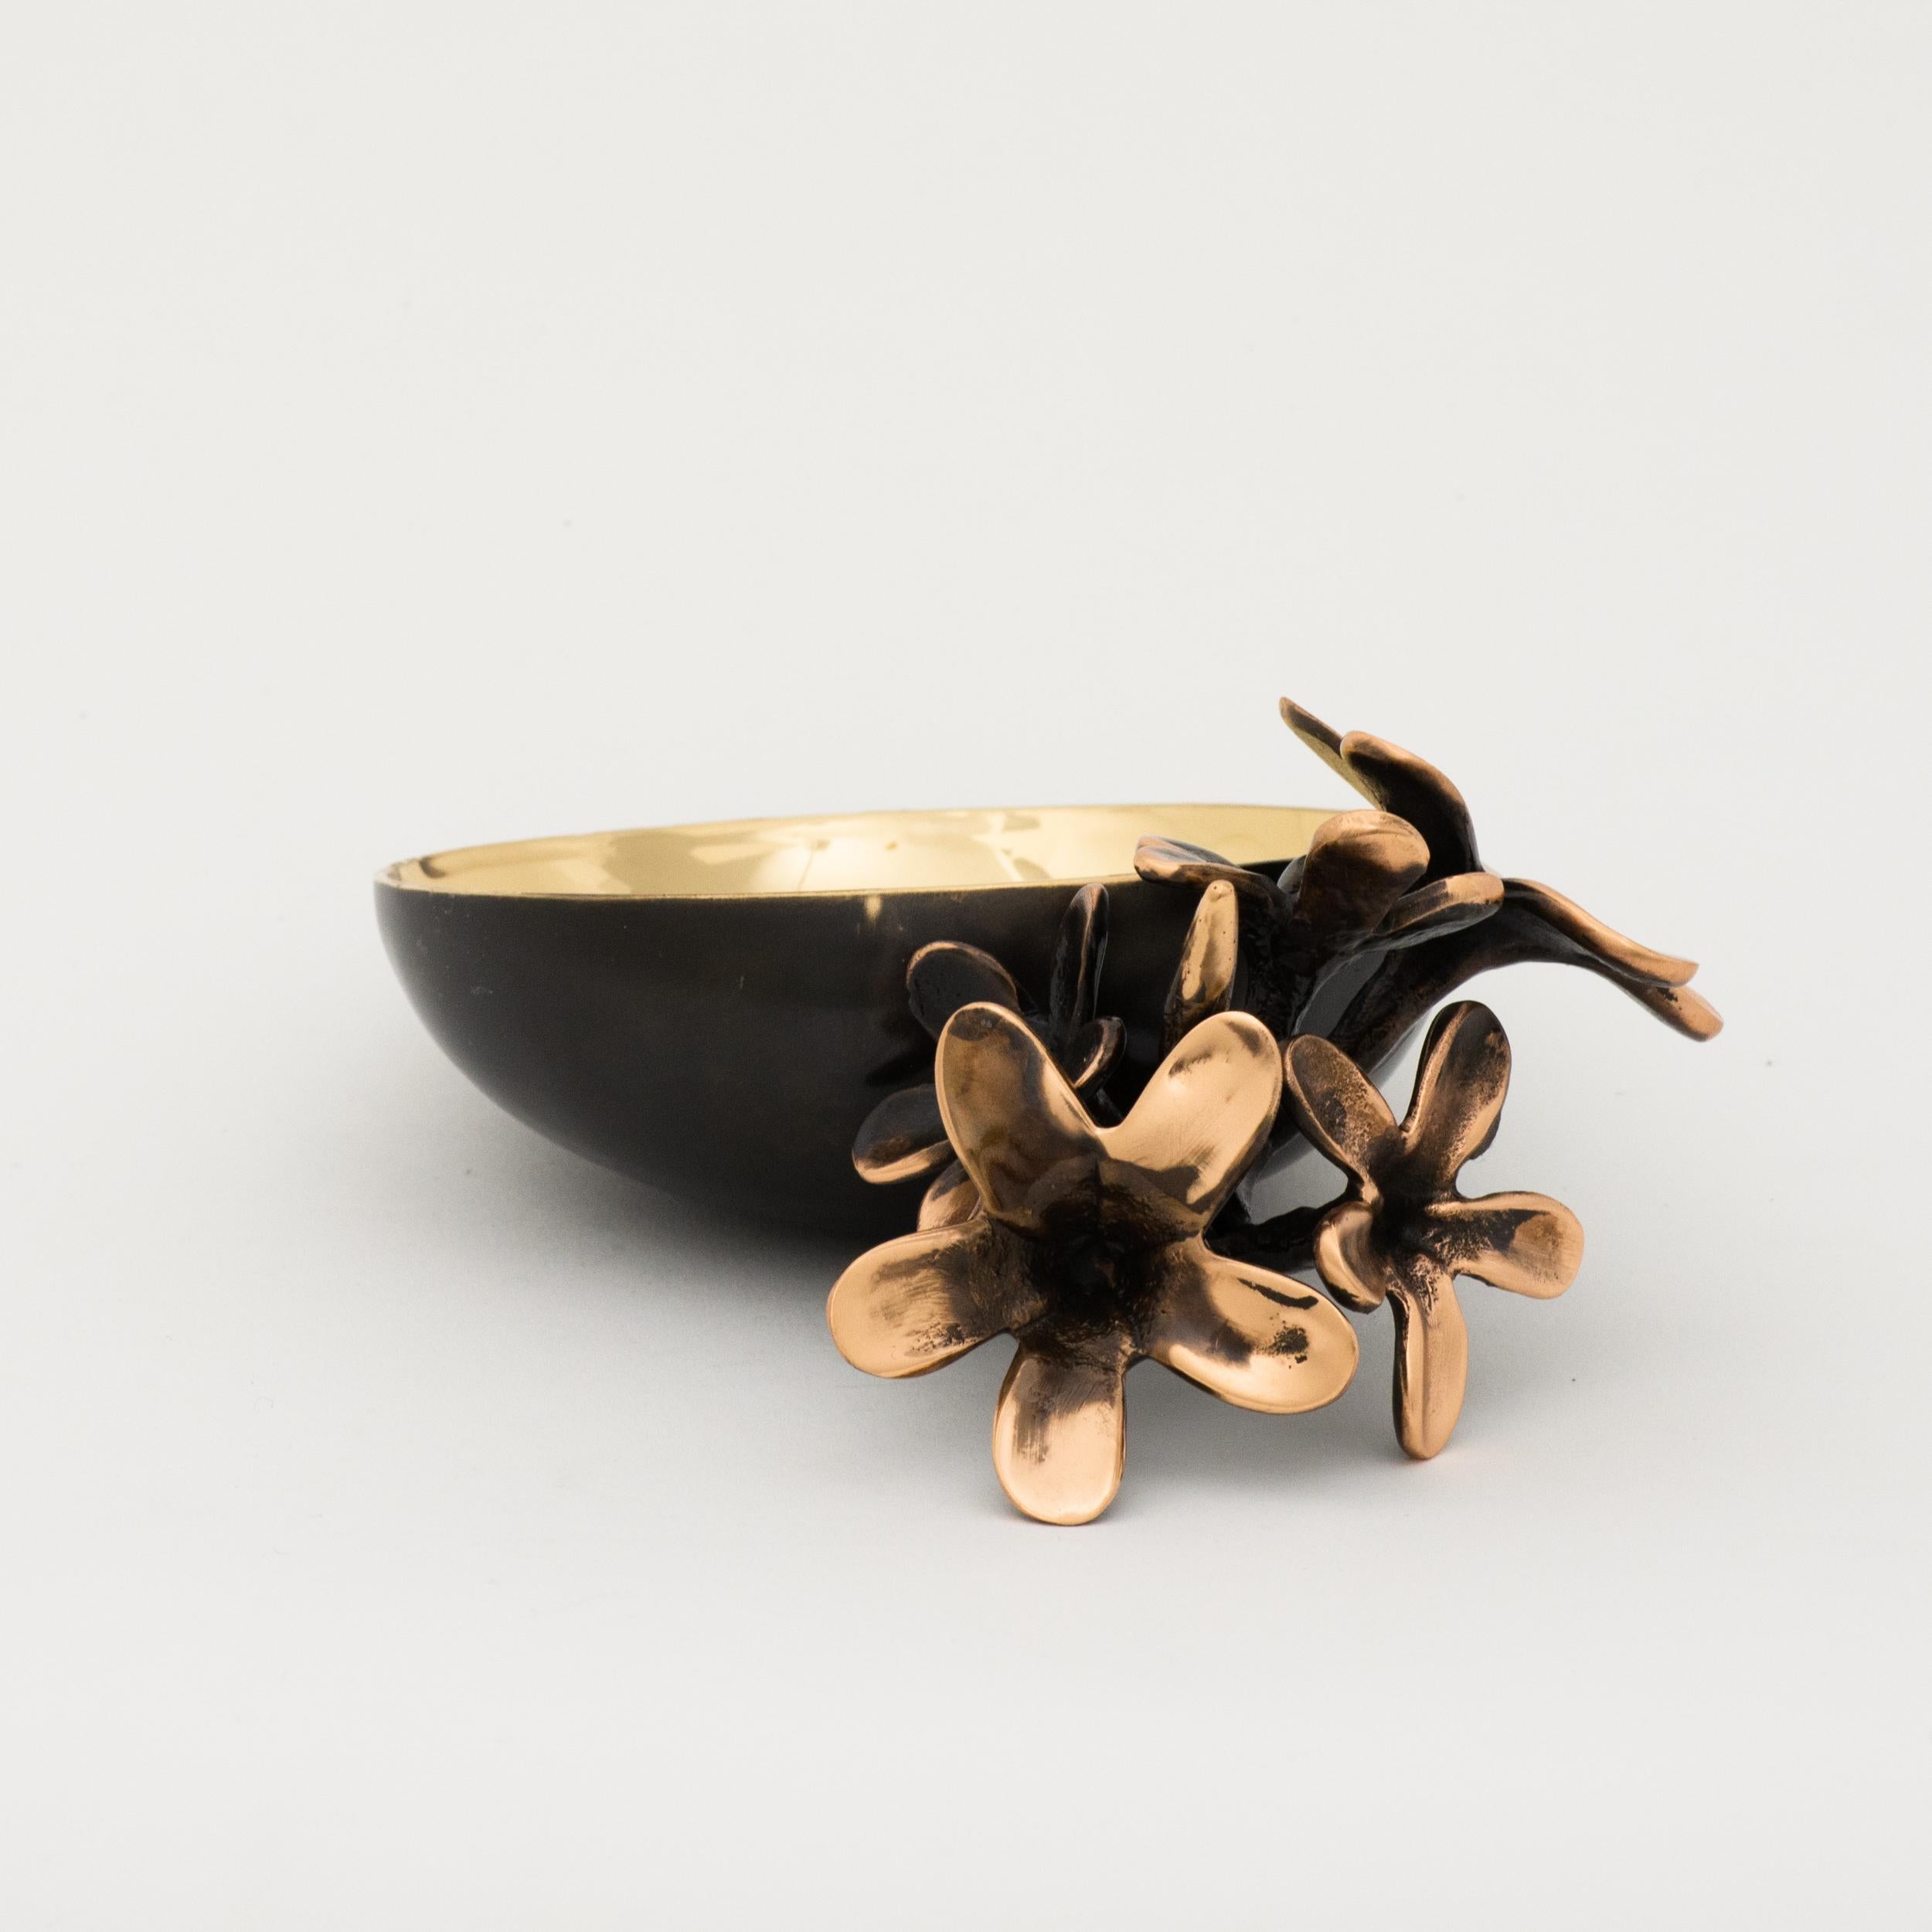 Organic Modern Handmade Cast Bronze Indian Bowl with Flowers, Vide Poche